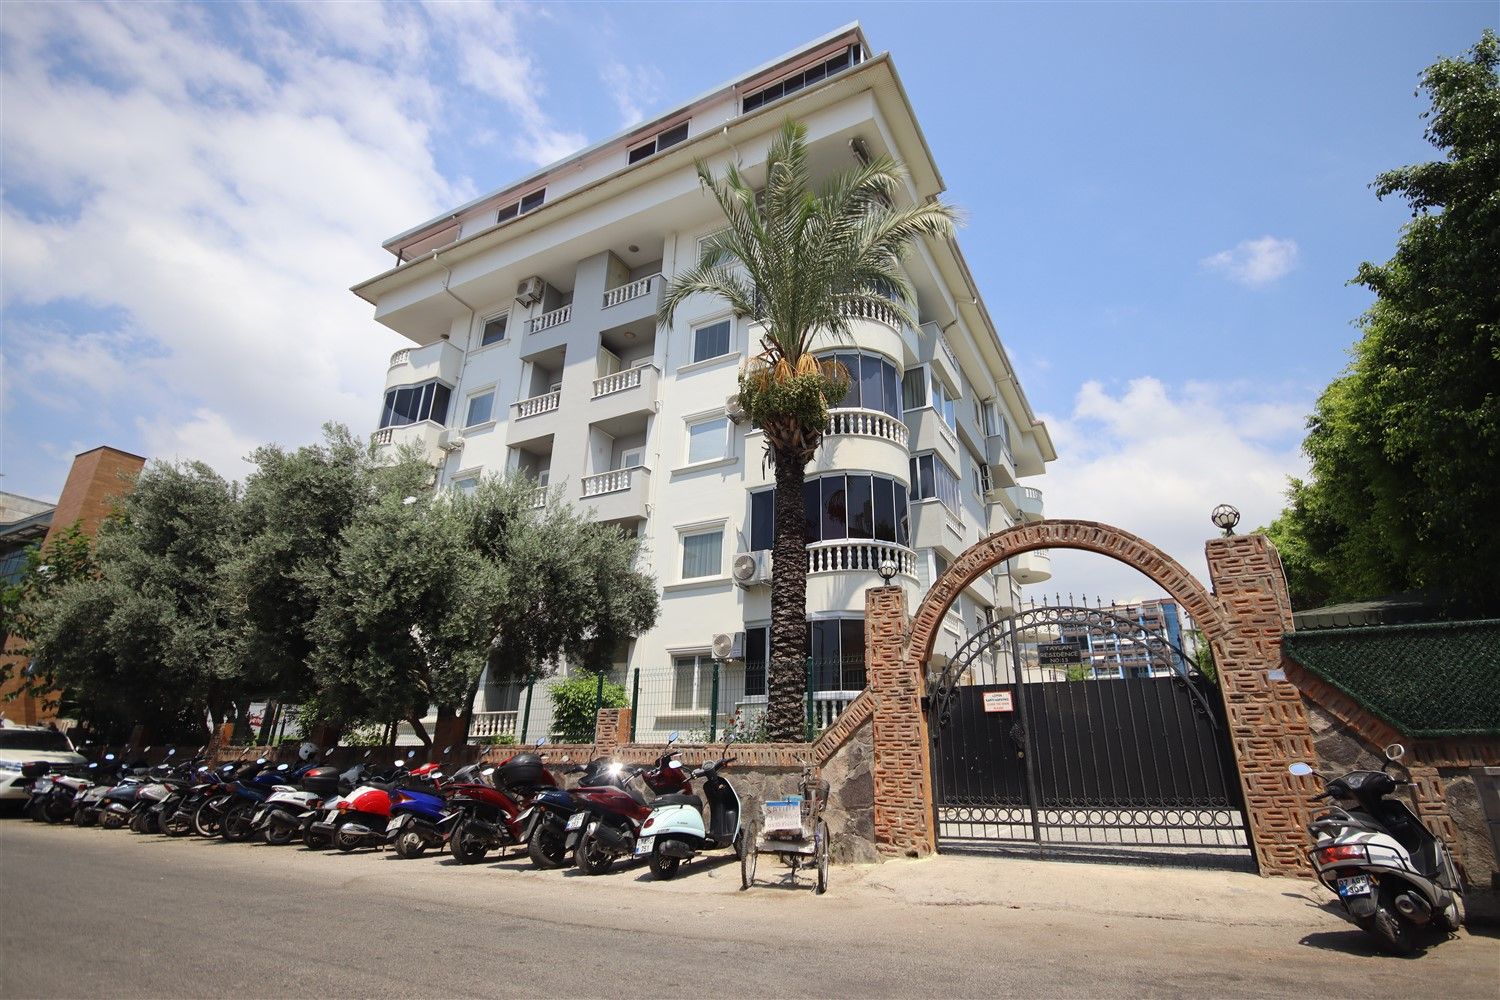 Furnished 2-bedrooms apartment - Cikcilli district, Alanya